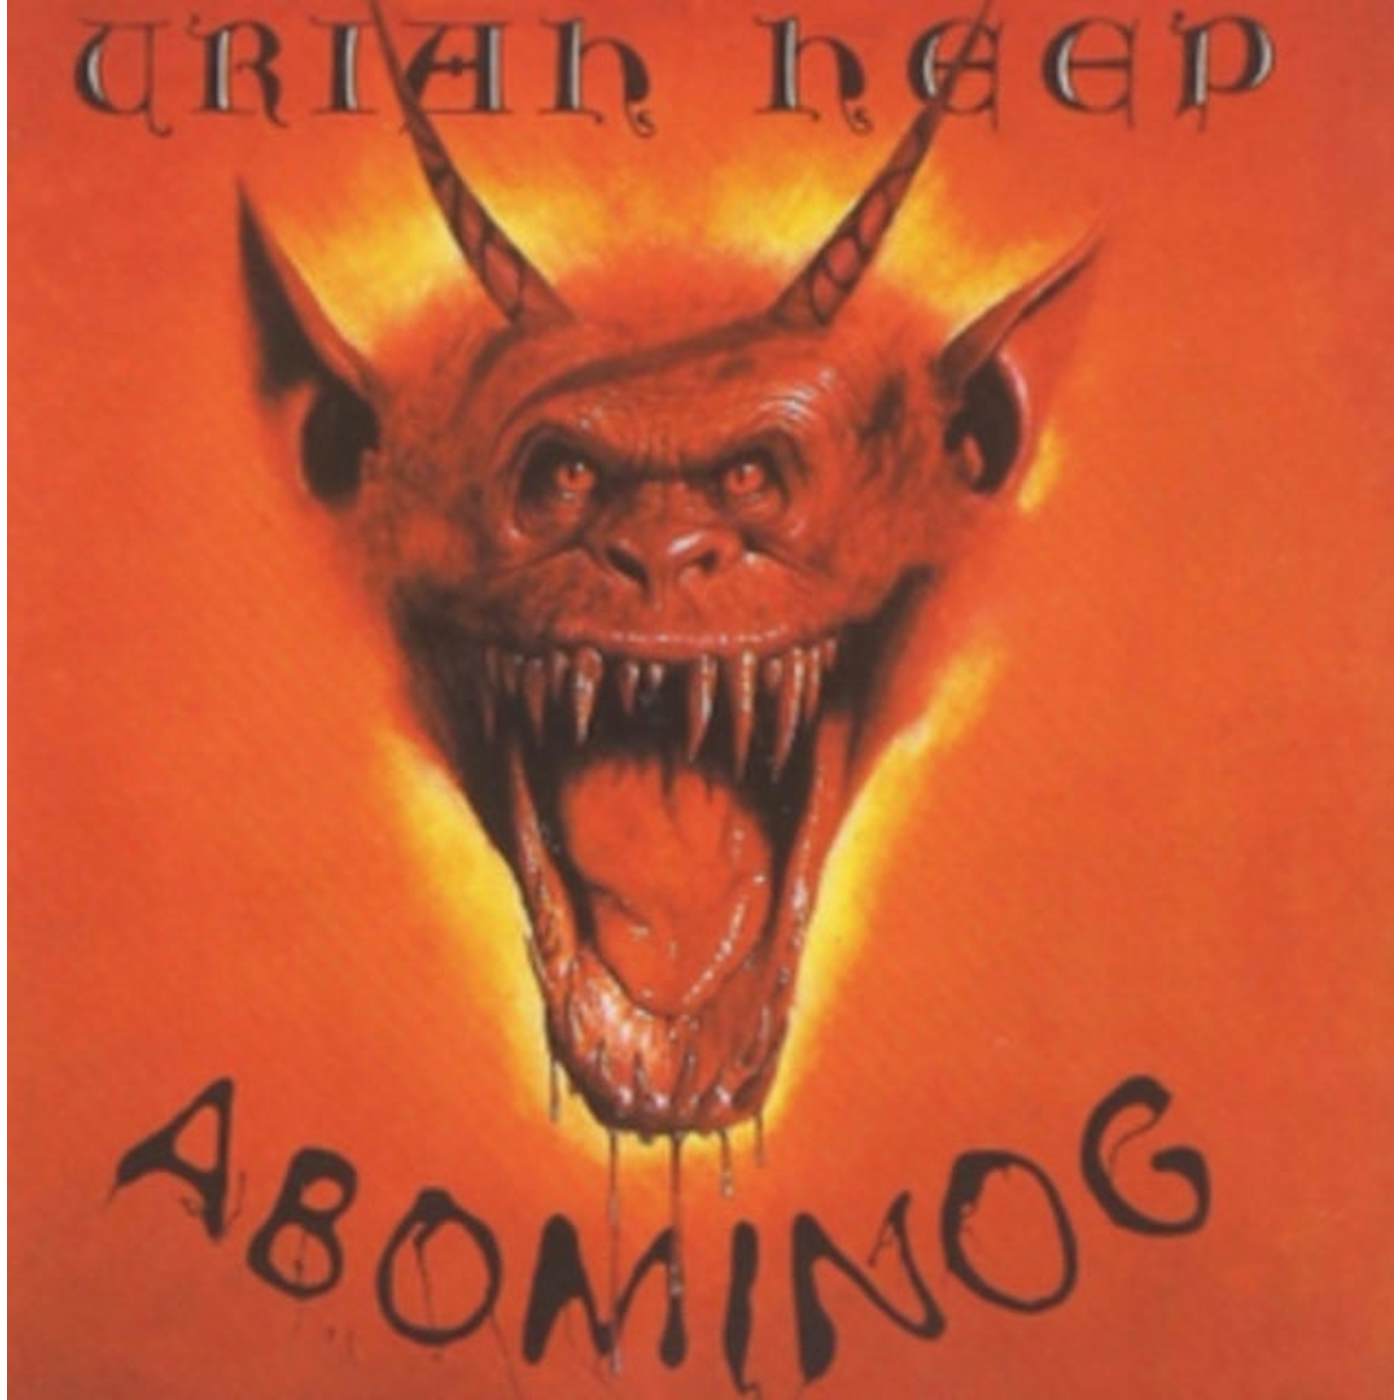 Uriah Heep LP Vinyl Record - Abominog